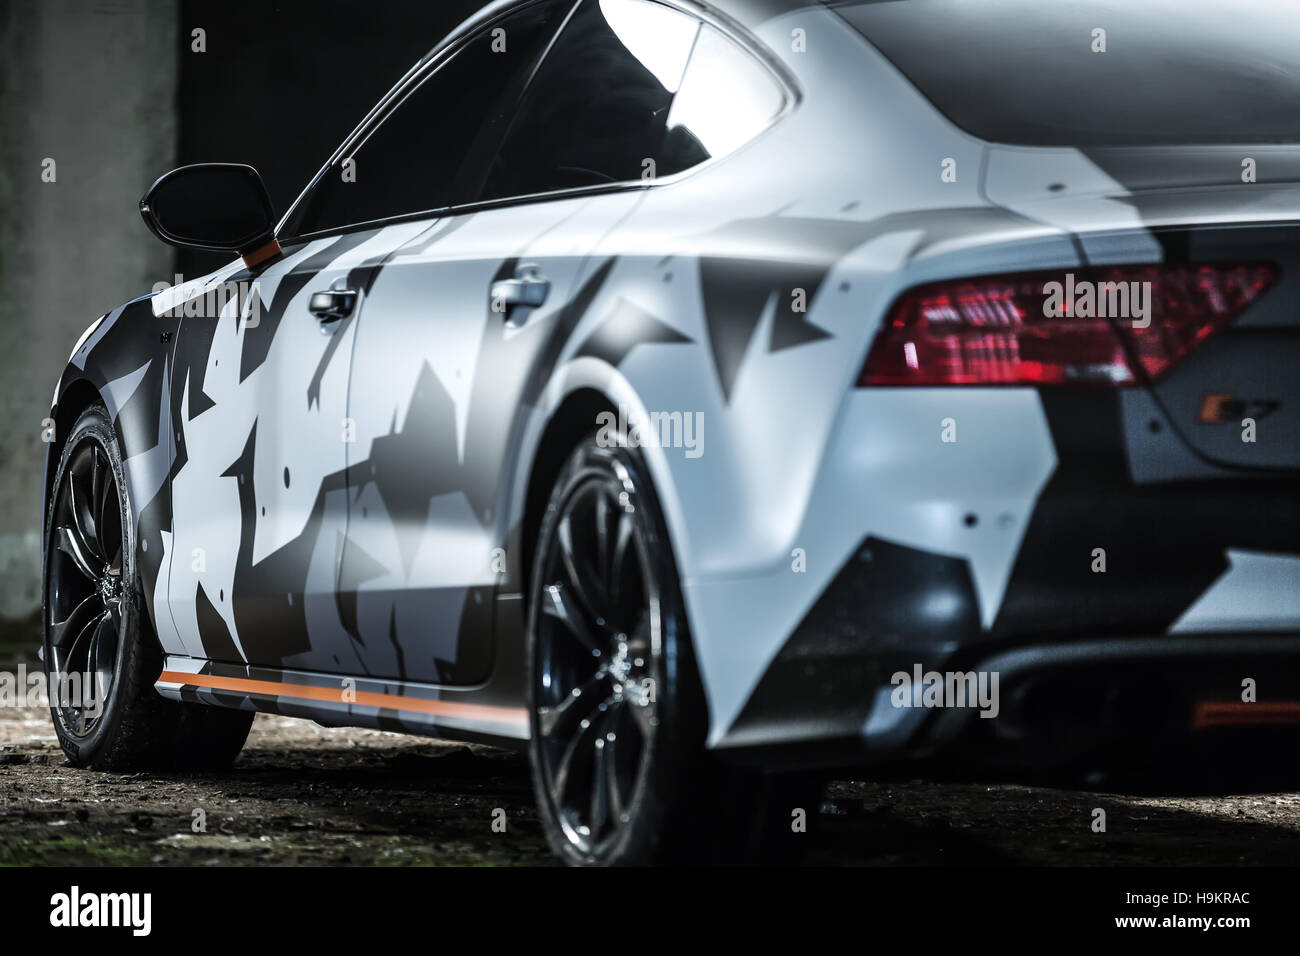 Audi S7 tuning Stockfotografie - Alamy